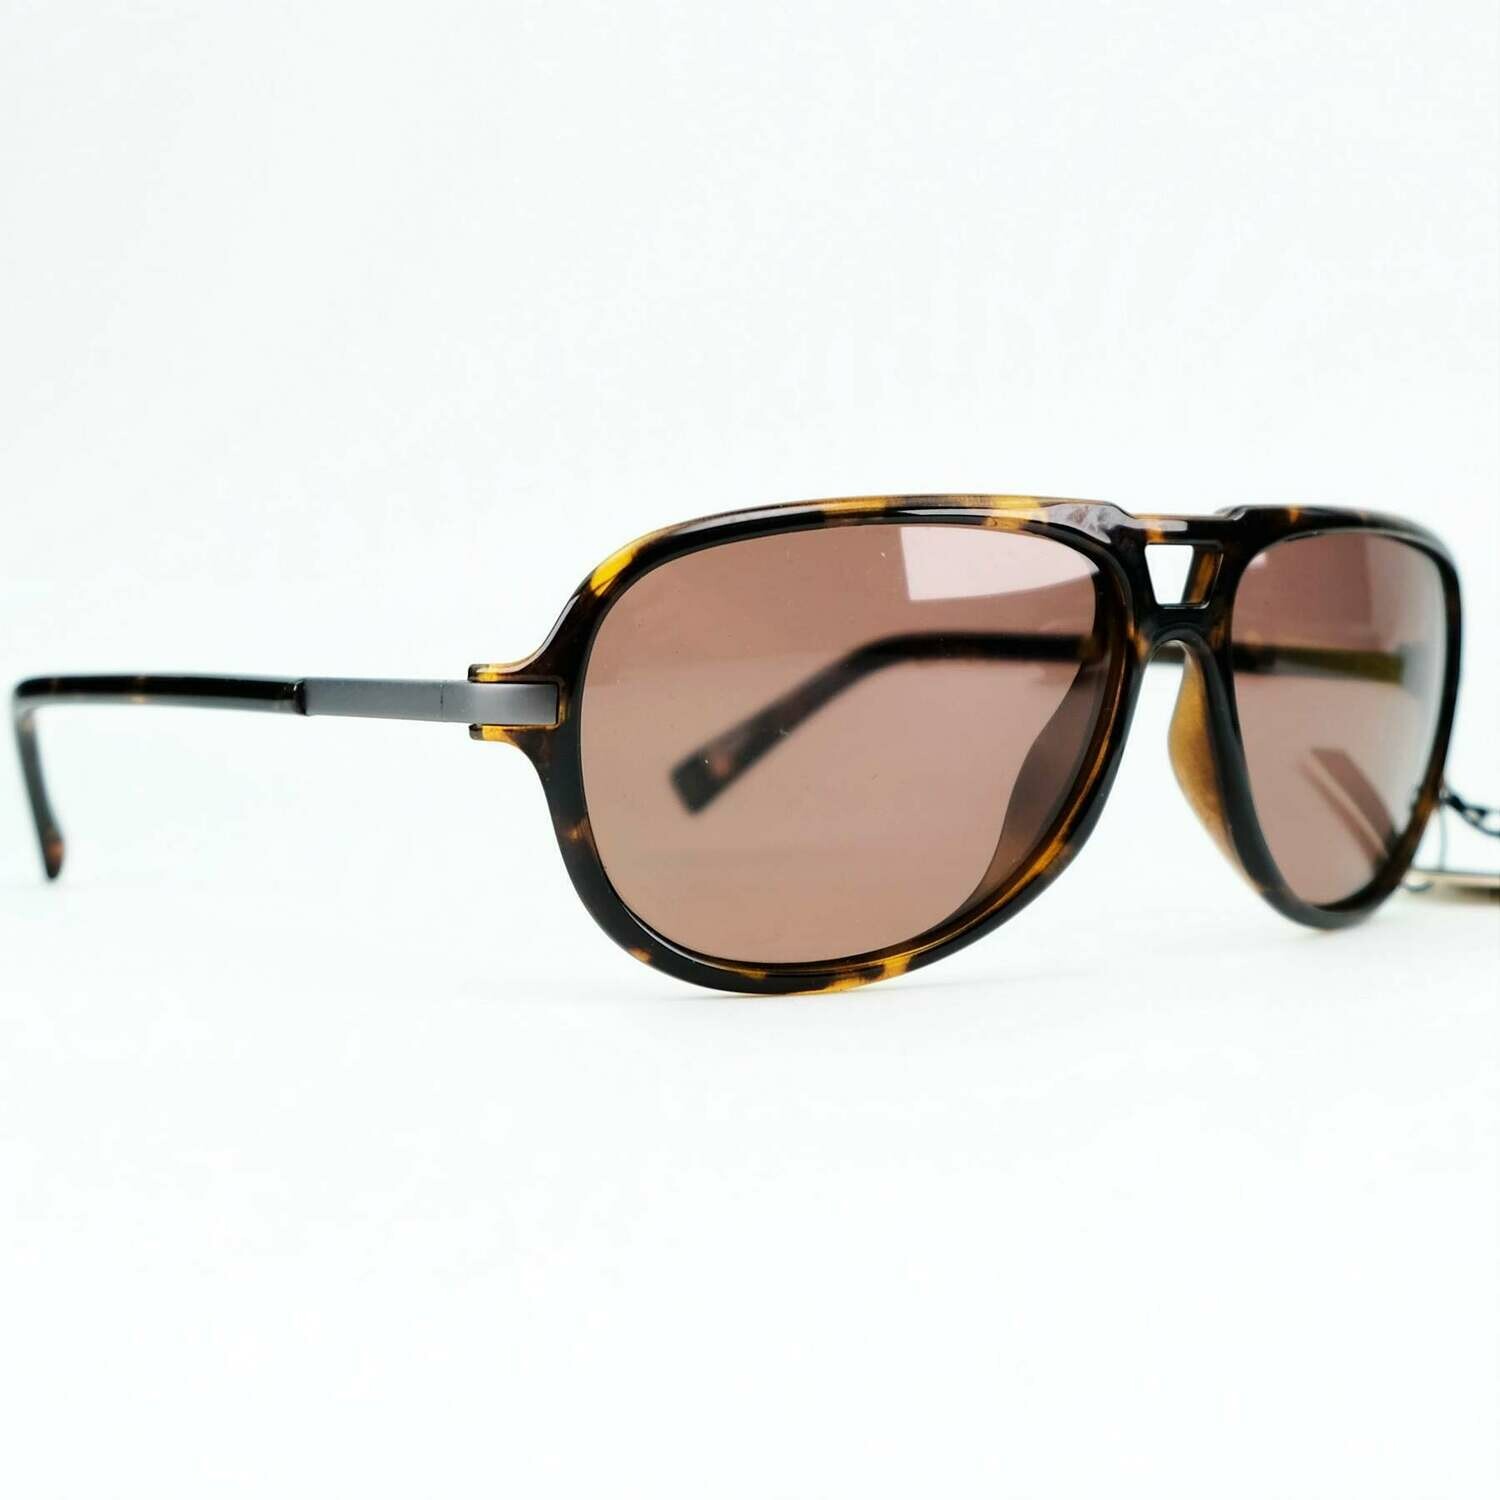 Fabris Lane Steve M 1776 Sunglasses